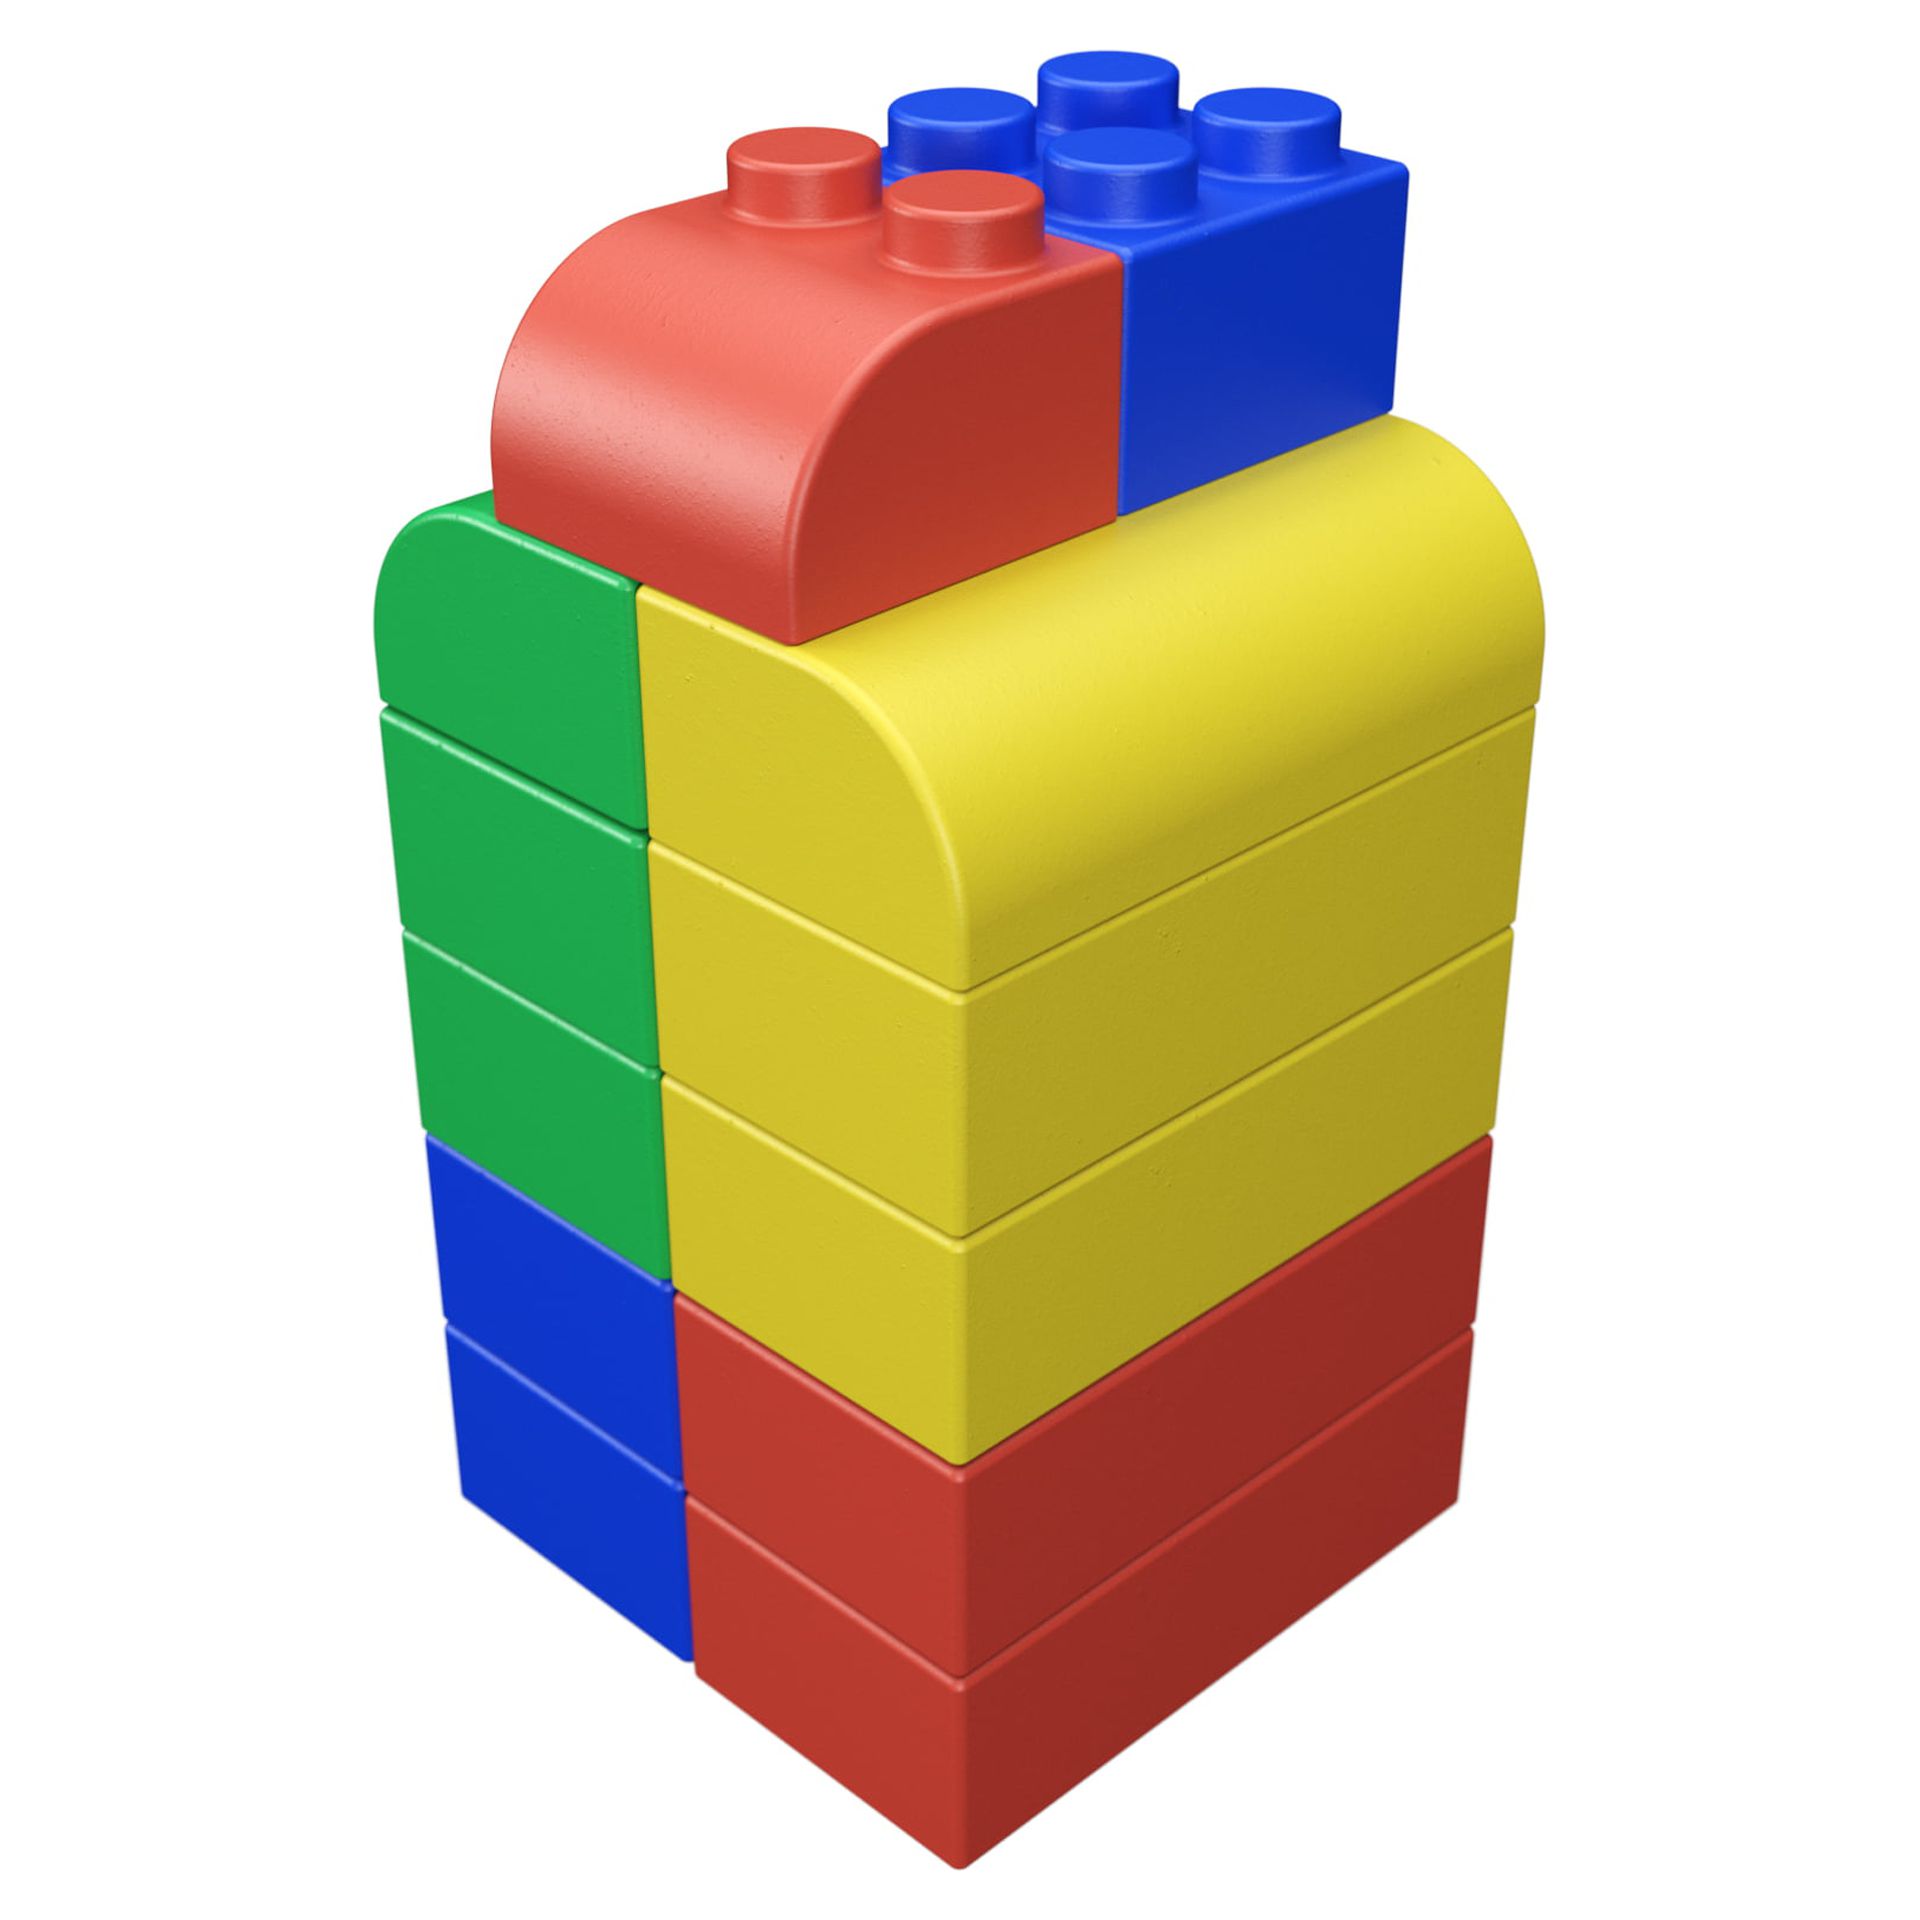 Colossal Blocks Jumbo Soft Building Blocks (12 pieces) - image 5 of 11